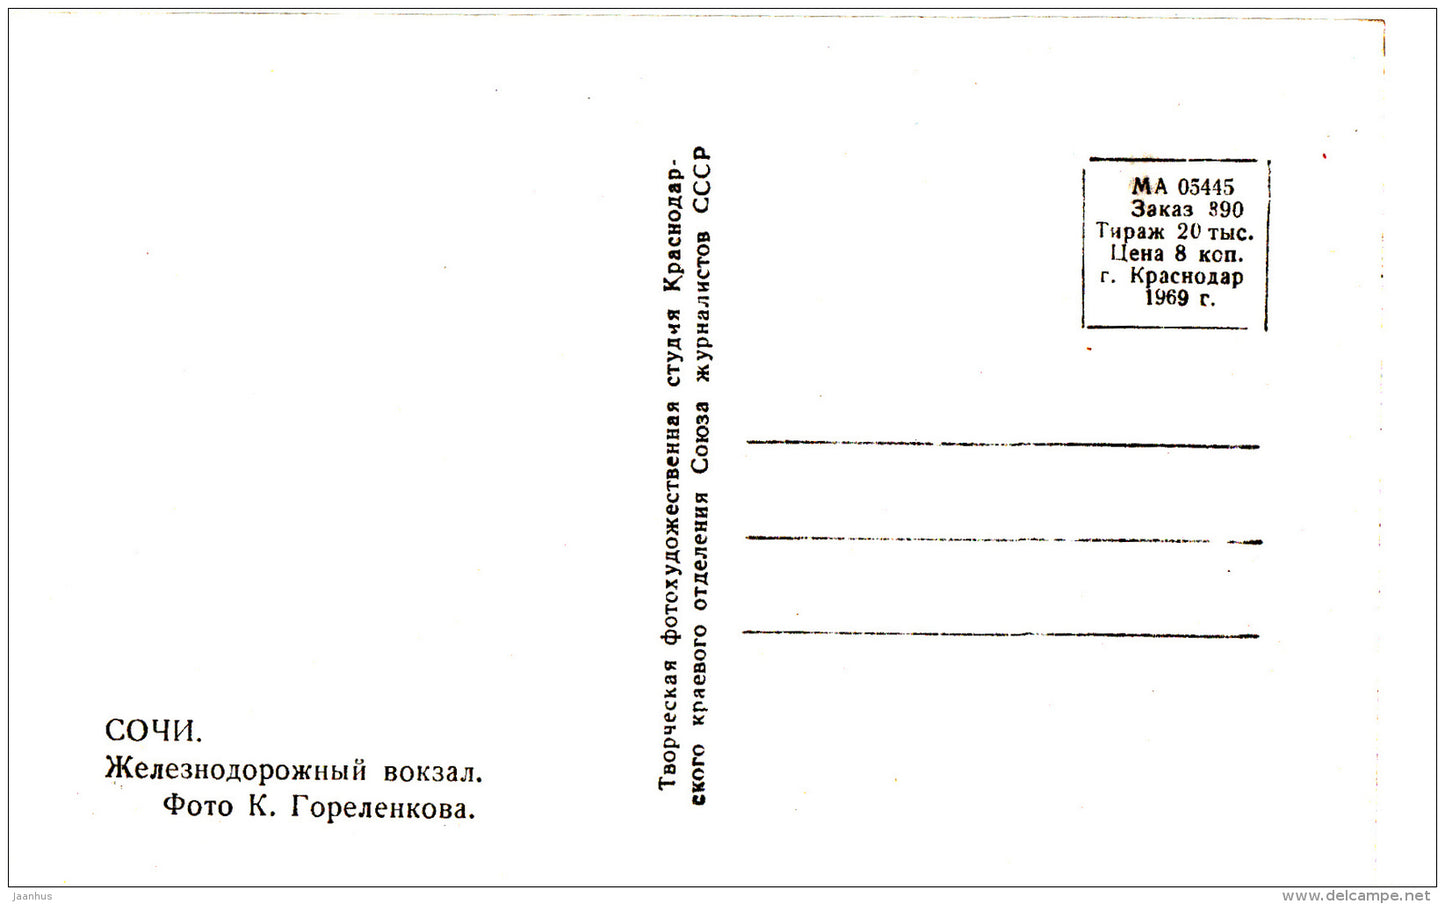 Railway Station - Sochi - 1969 - Russia USSR - unused - JH Postcards